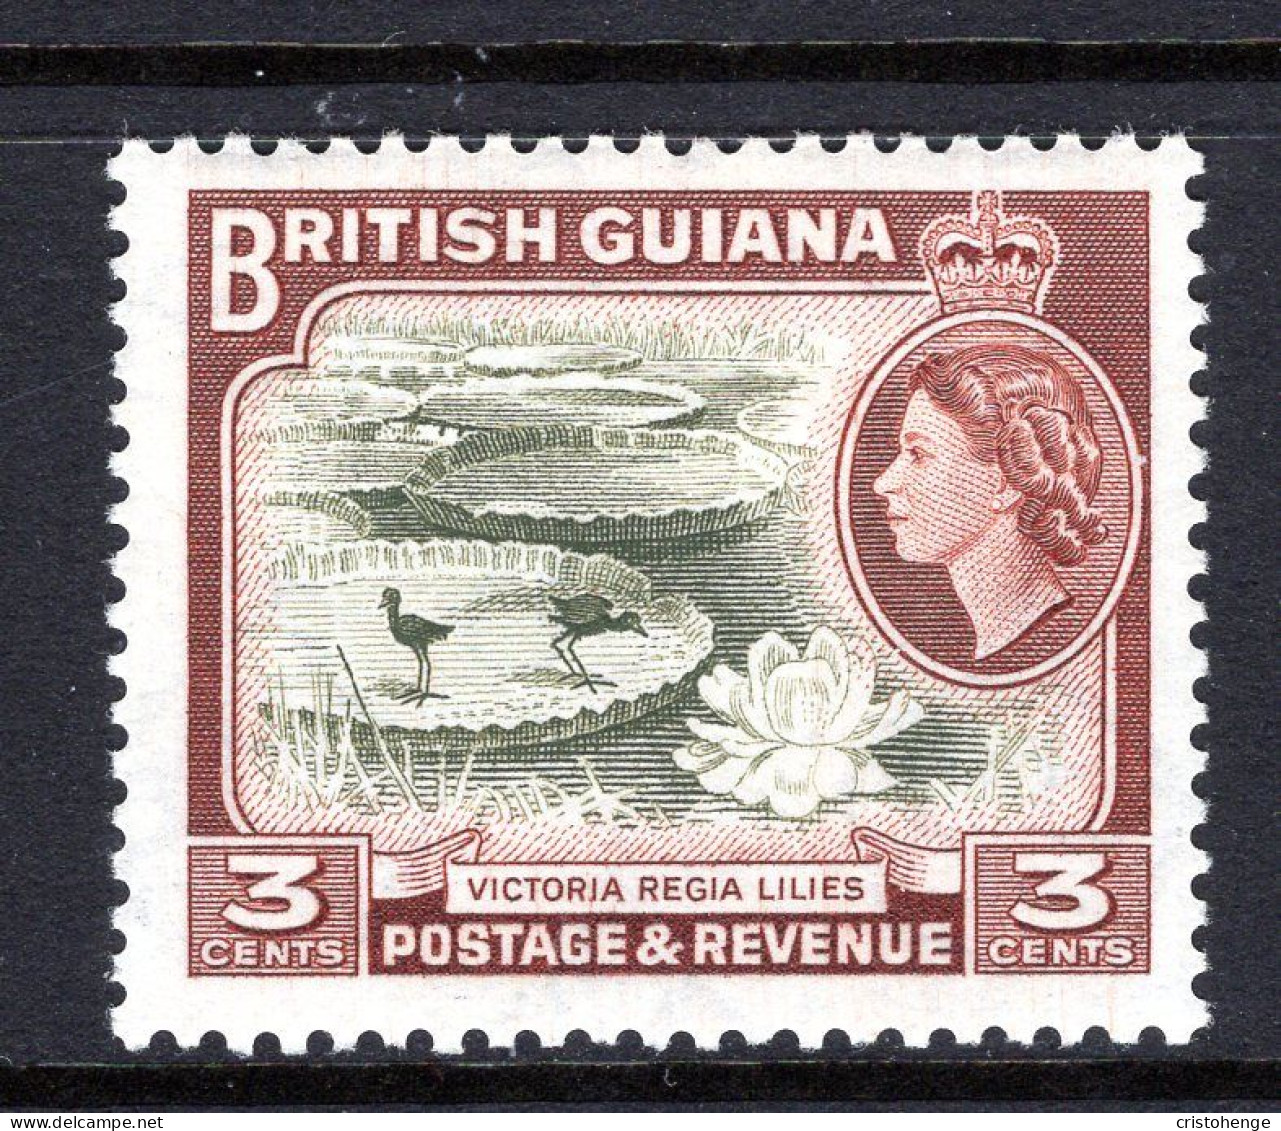 British Guiana 1954-63 QEII Pictorials - 3c Water Lilies HM (SG 333) - Brits-Guiana (...-1966)